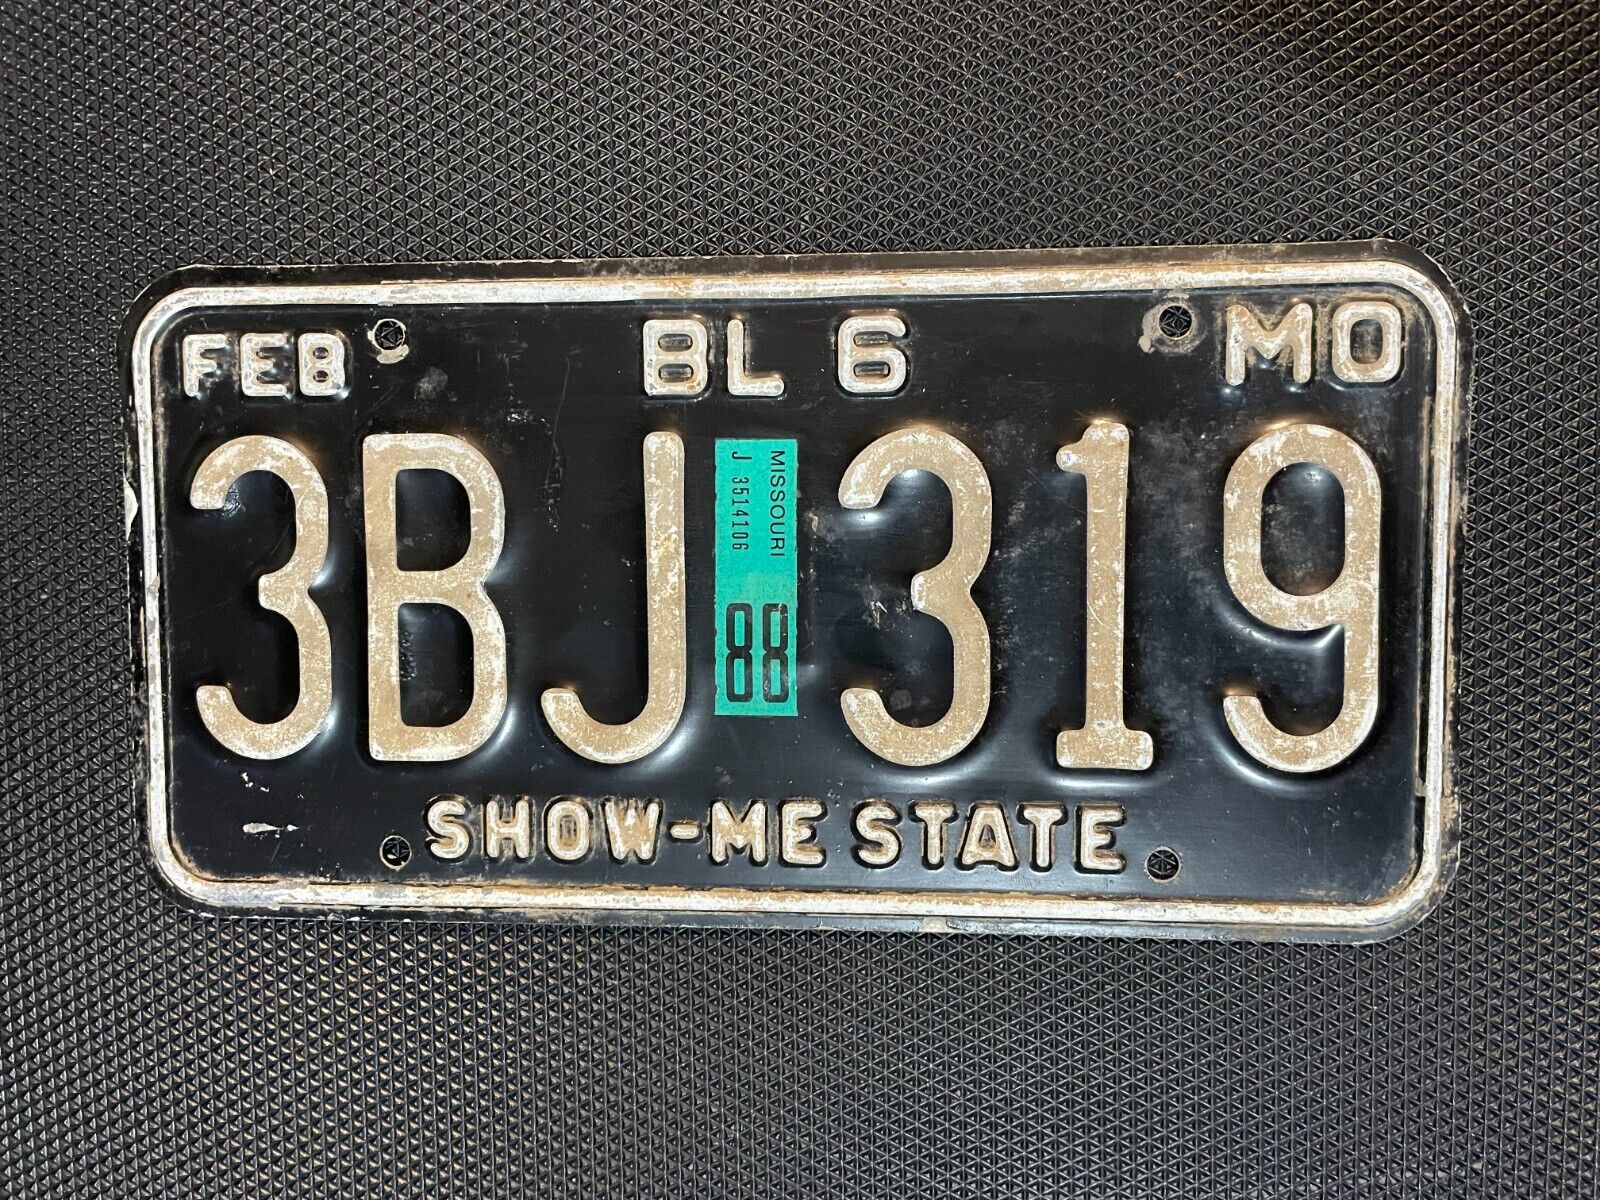 MISSOURI LICENSE PLATE 1988 FEBRUARY TRUCK 3BJ 319 SHOW-ME STATE